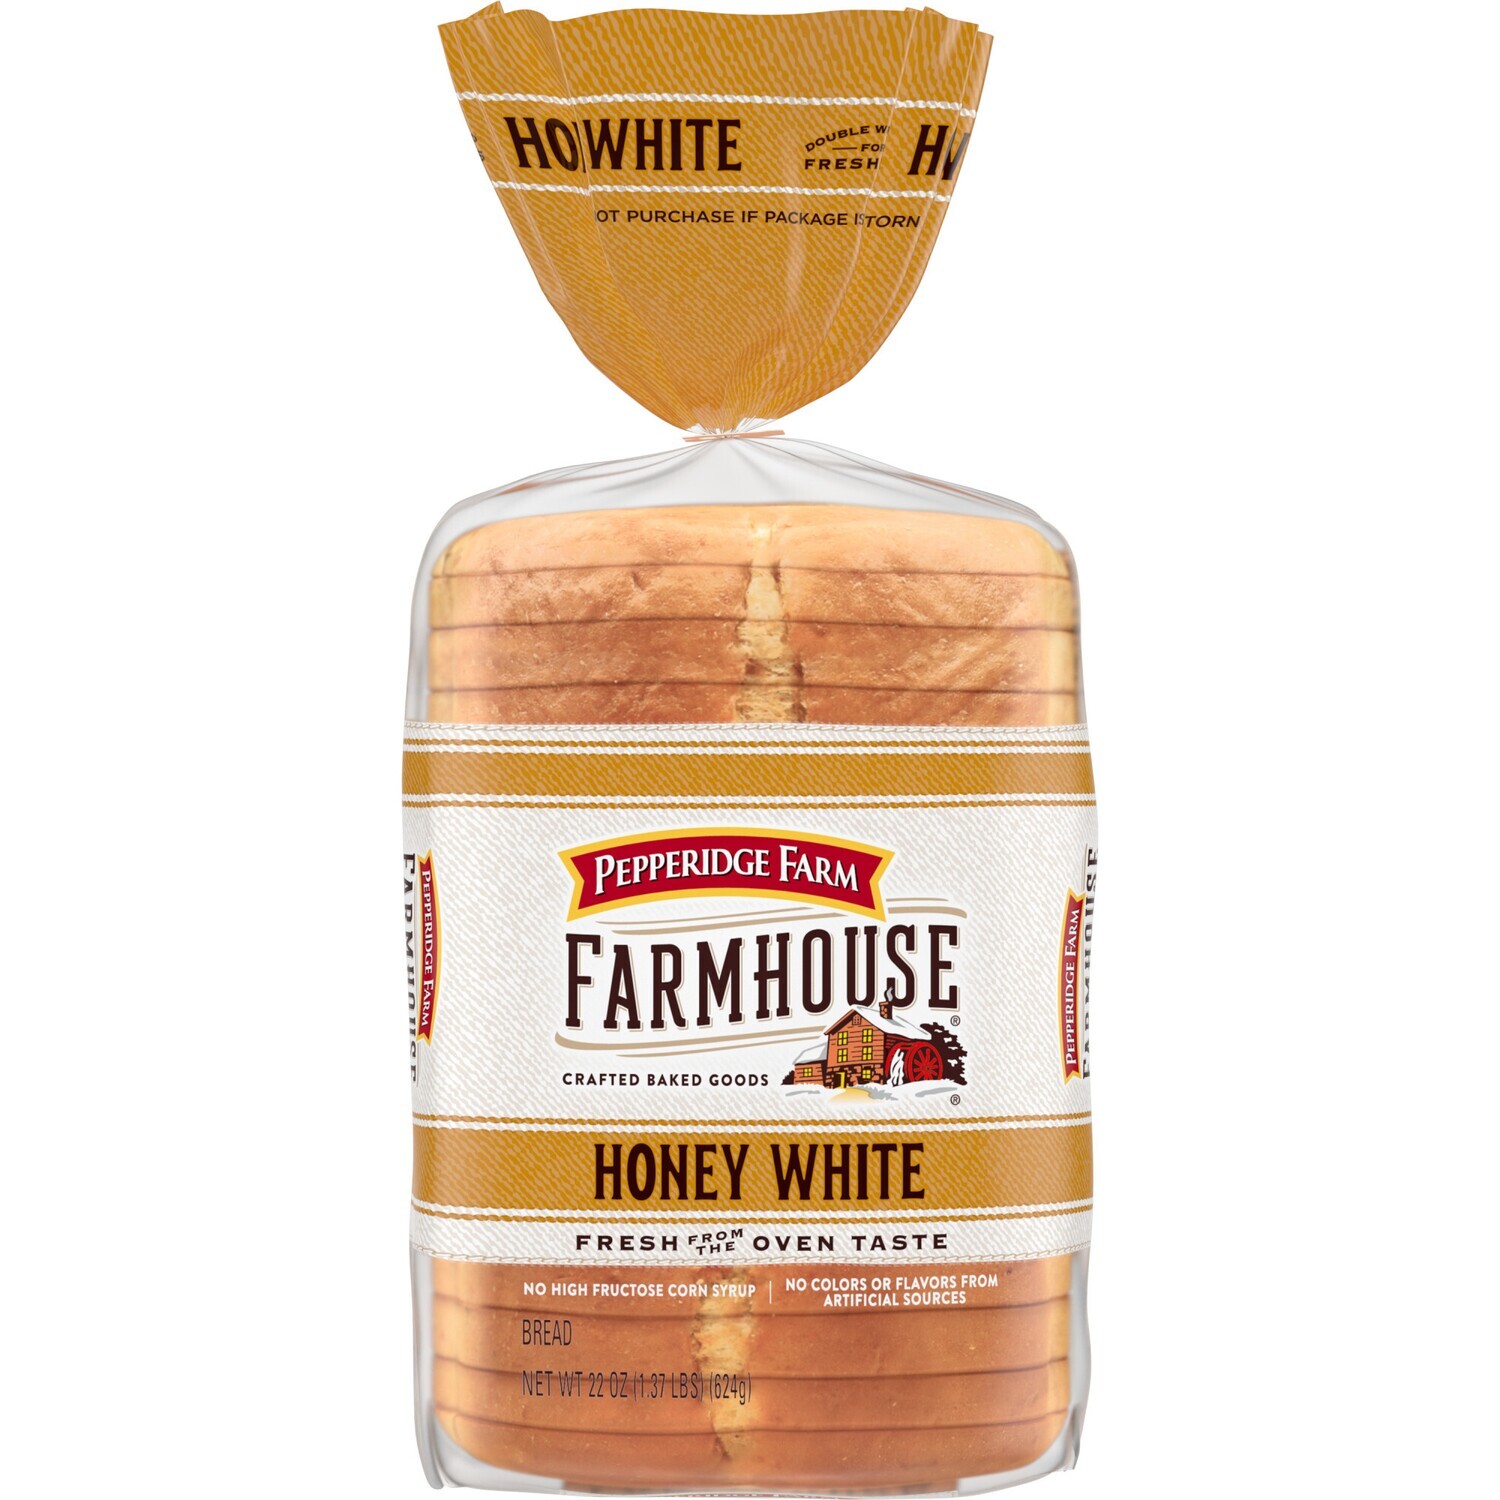 Pepperidge Farm Farmhouse     Honey White Bread